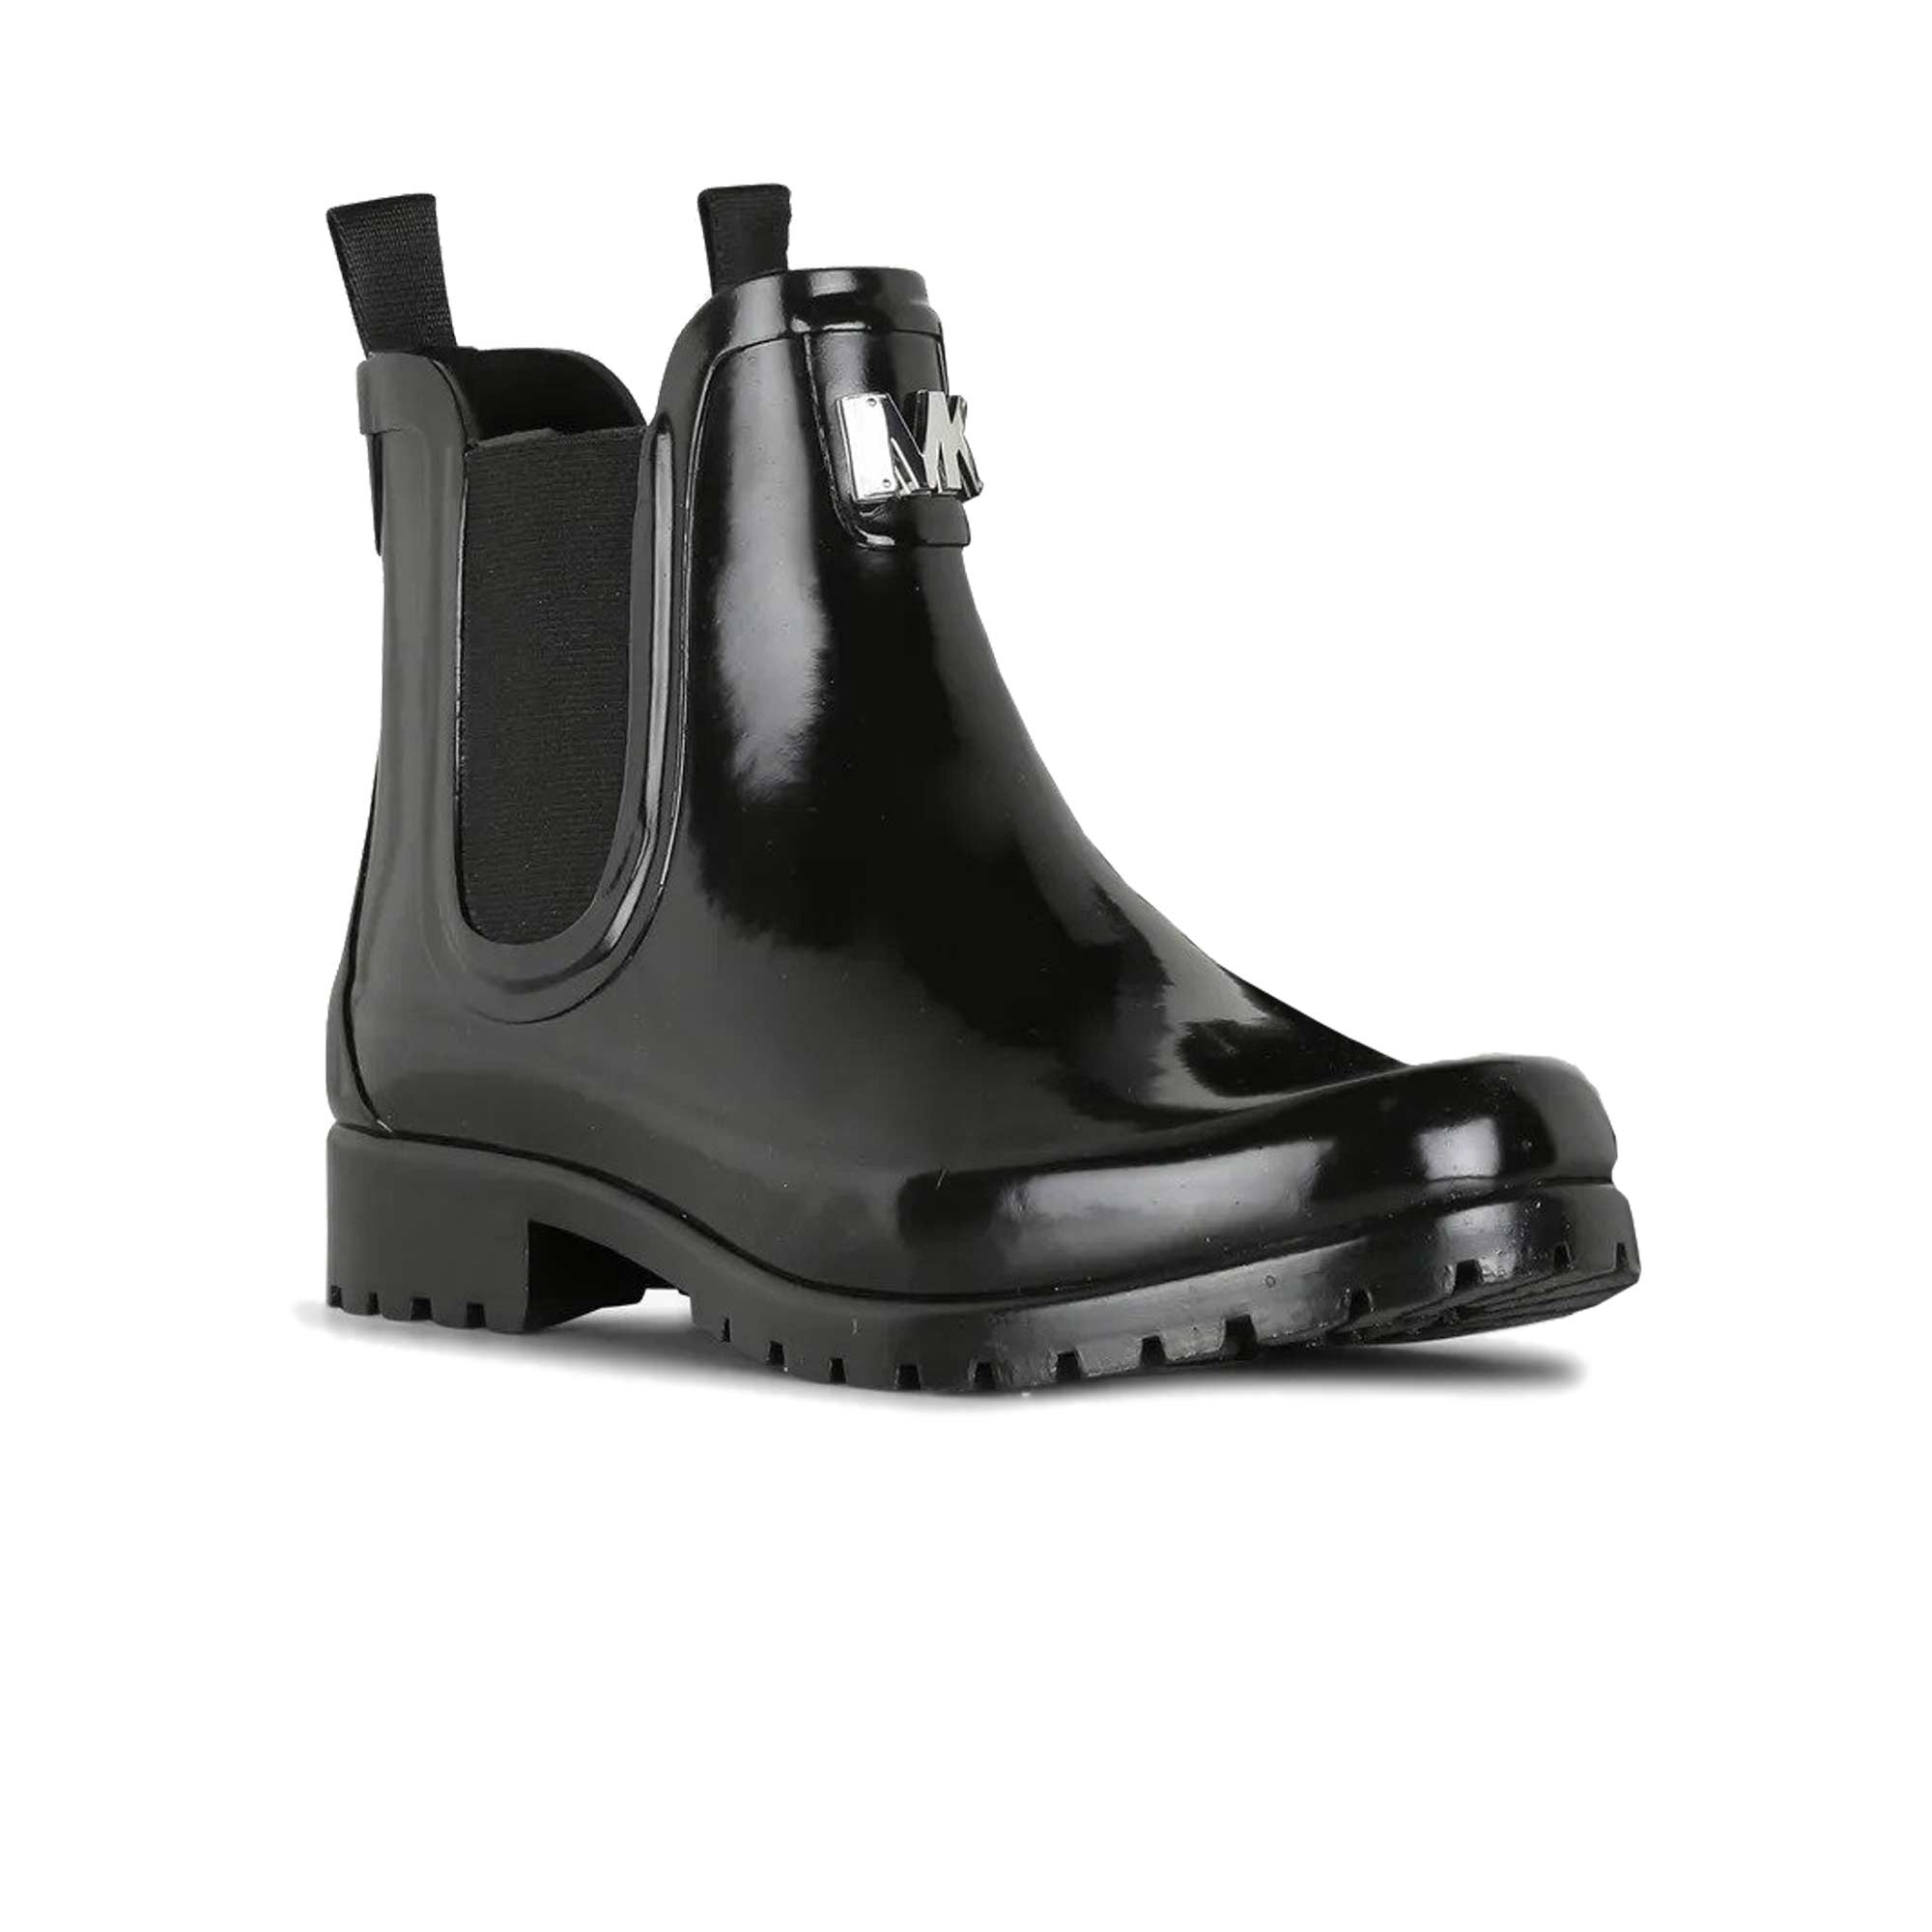 Michael kors rain boots, size 9 women boots,  Michael kors rain boots, Michael  kors boots, Womens boots